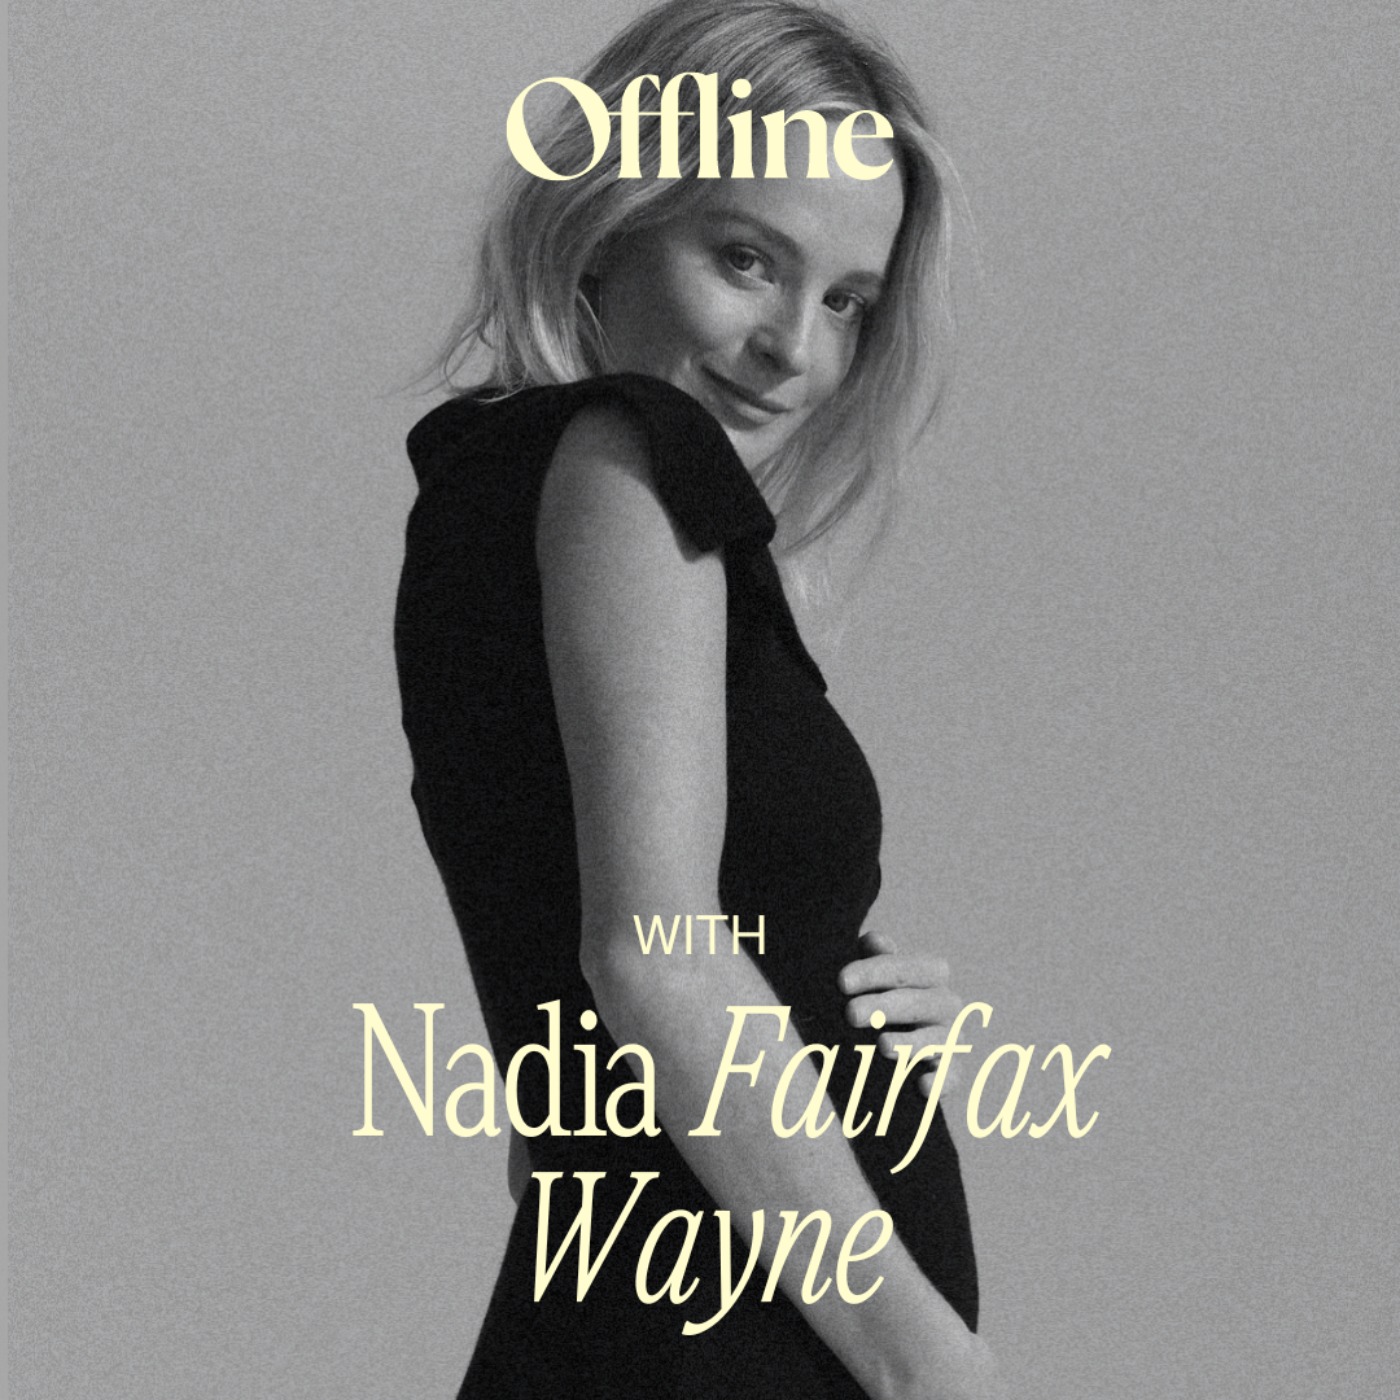 Checking in with Nadia Fairfax-Wayne.